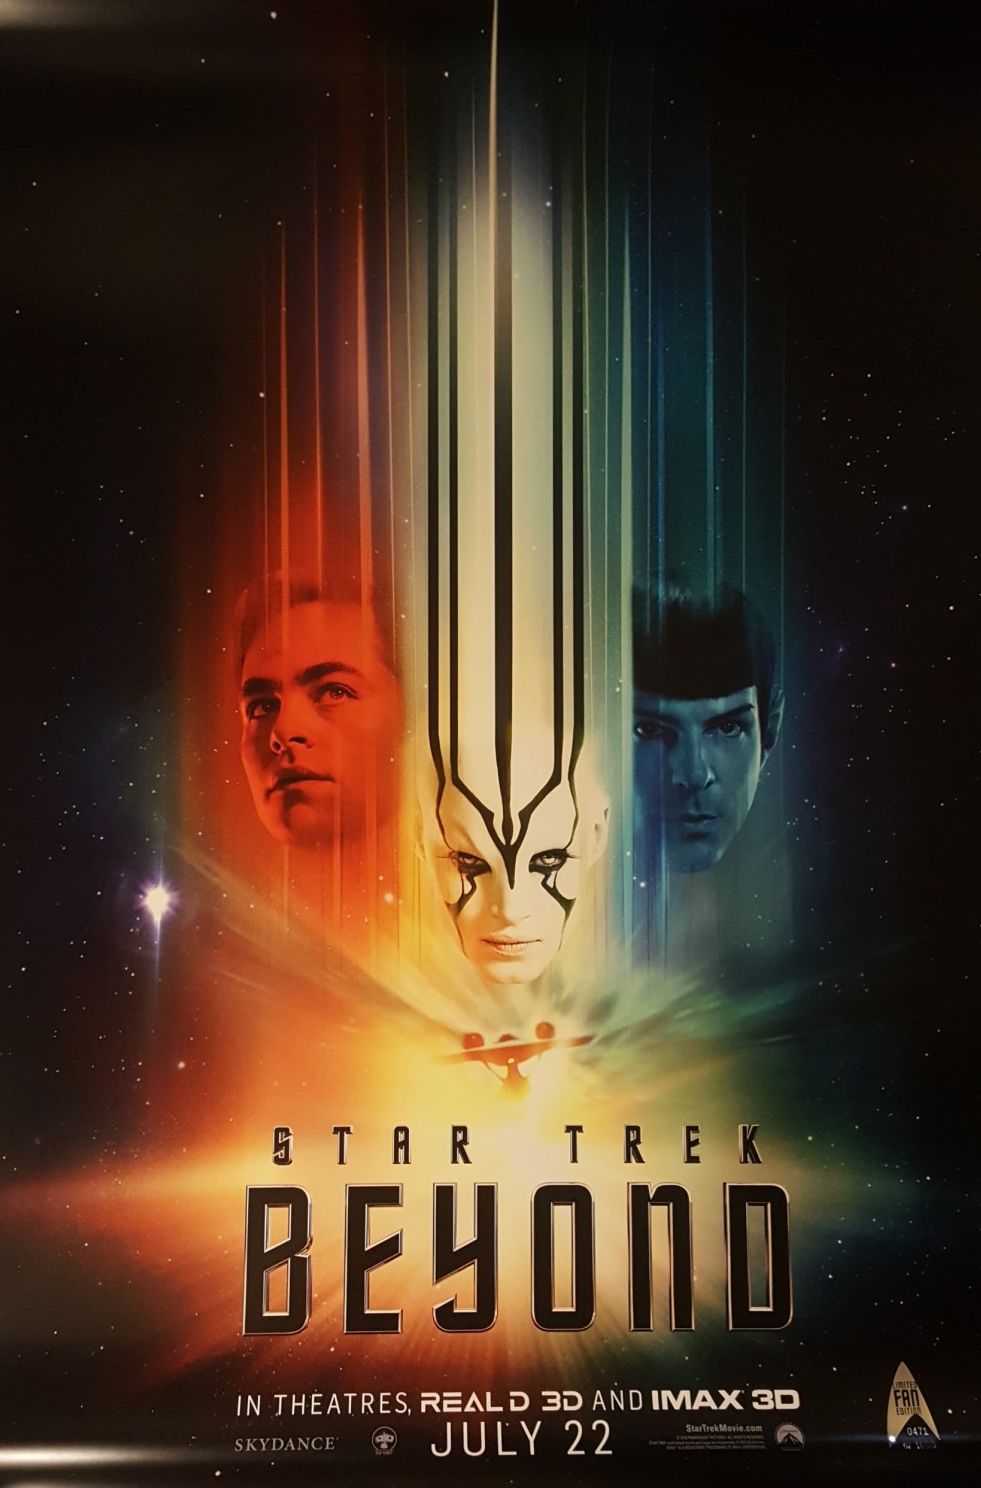 Star Trek Beyond poster lights it up